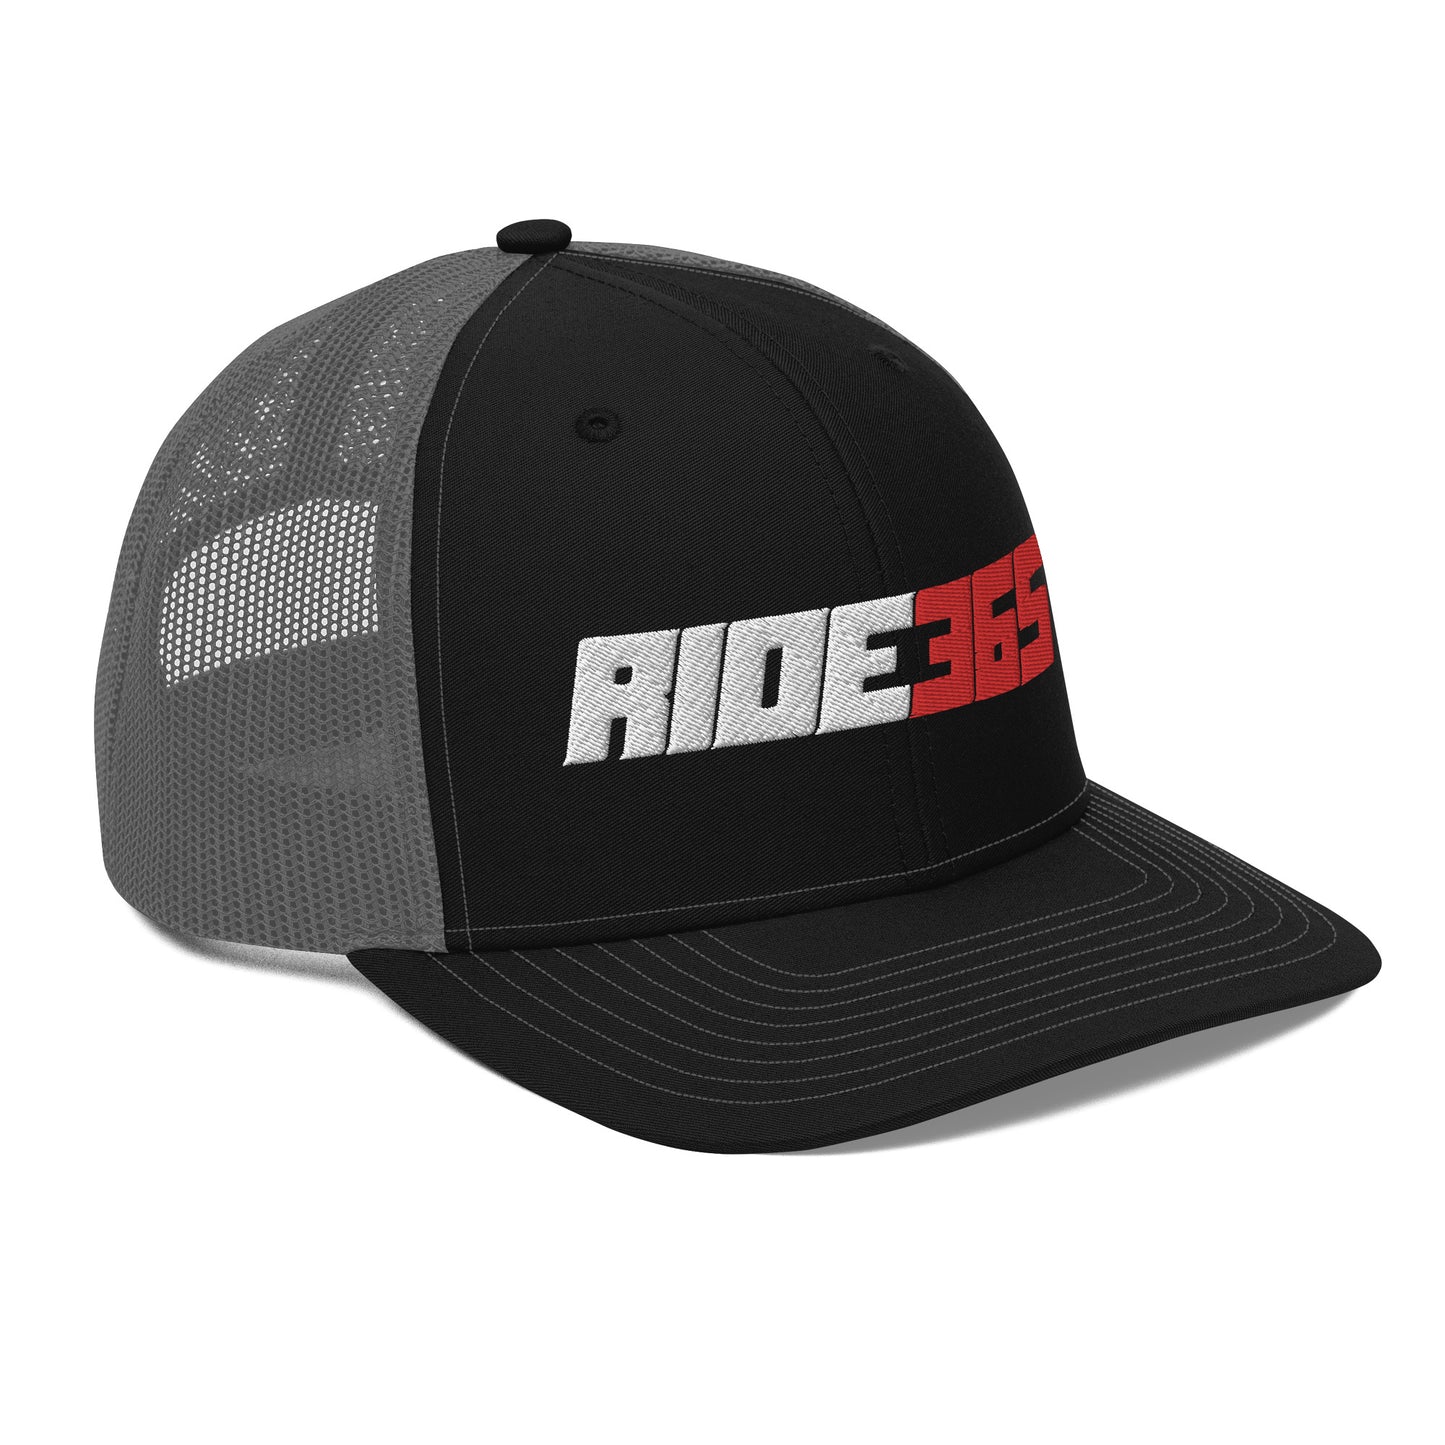 Ride365 Basic logo Trucker Cap